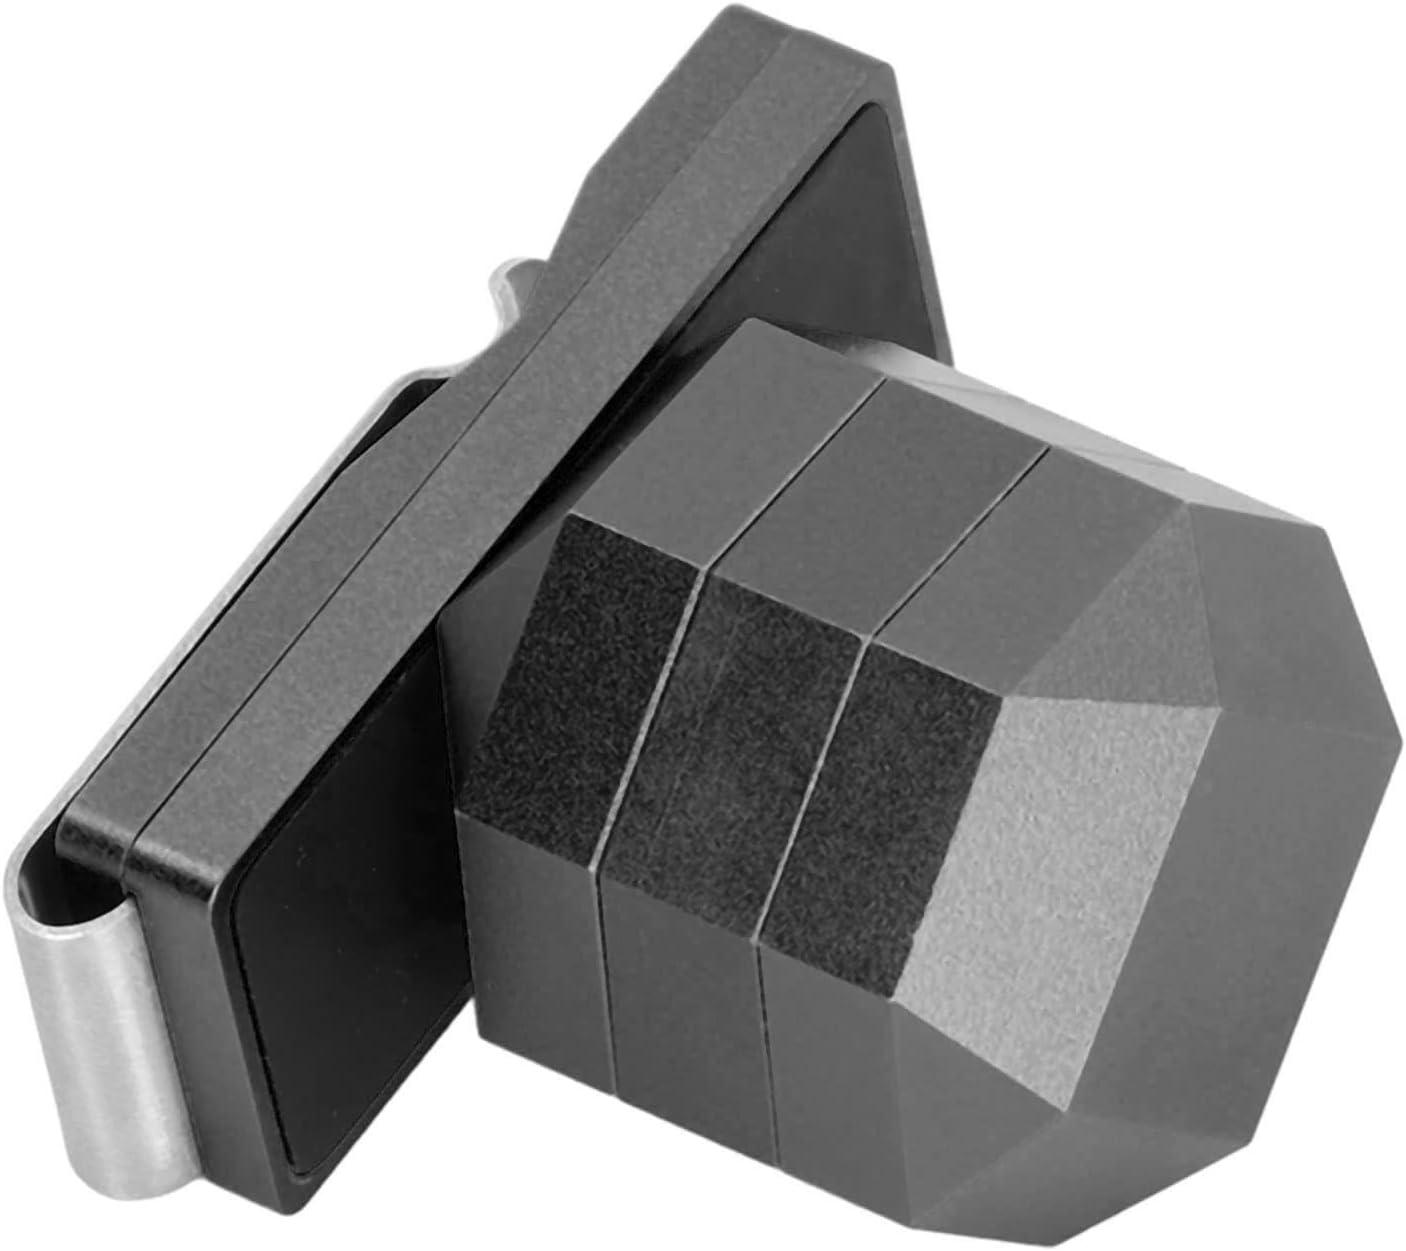 VGEBY Universal Aluminum Cue Chalk Holder Clip Octagon 3 Layers